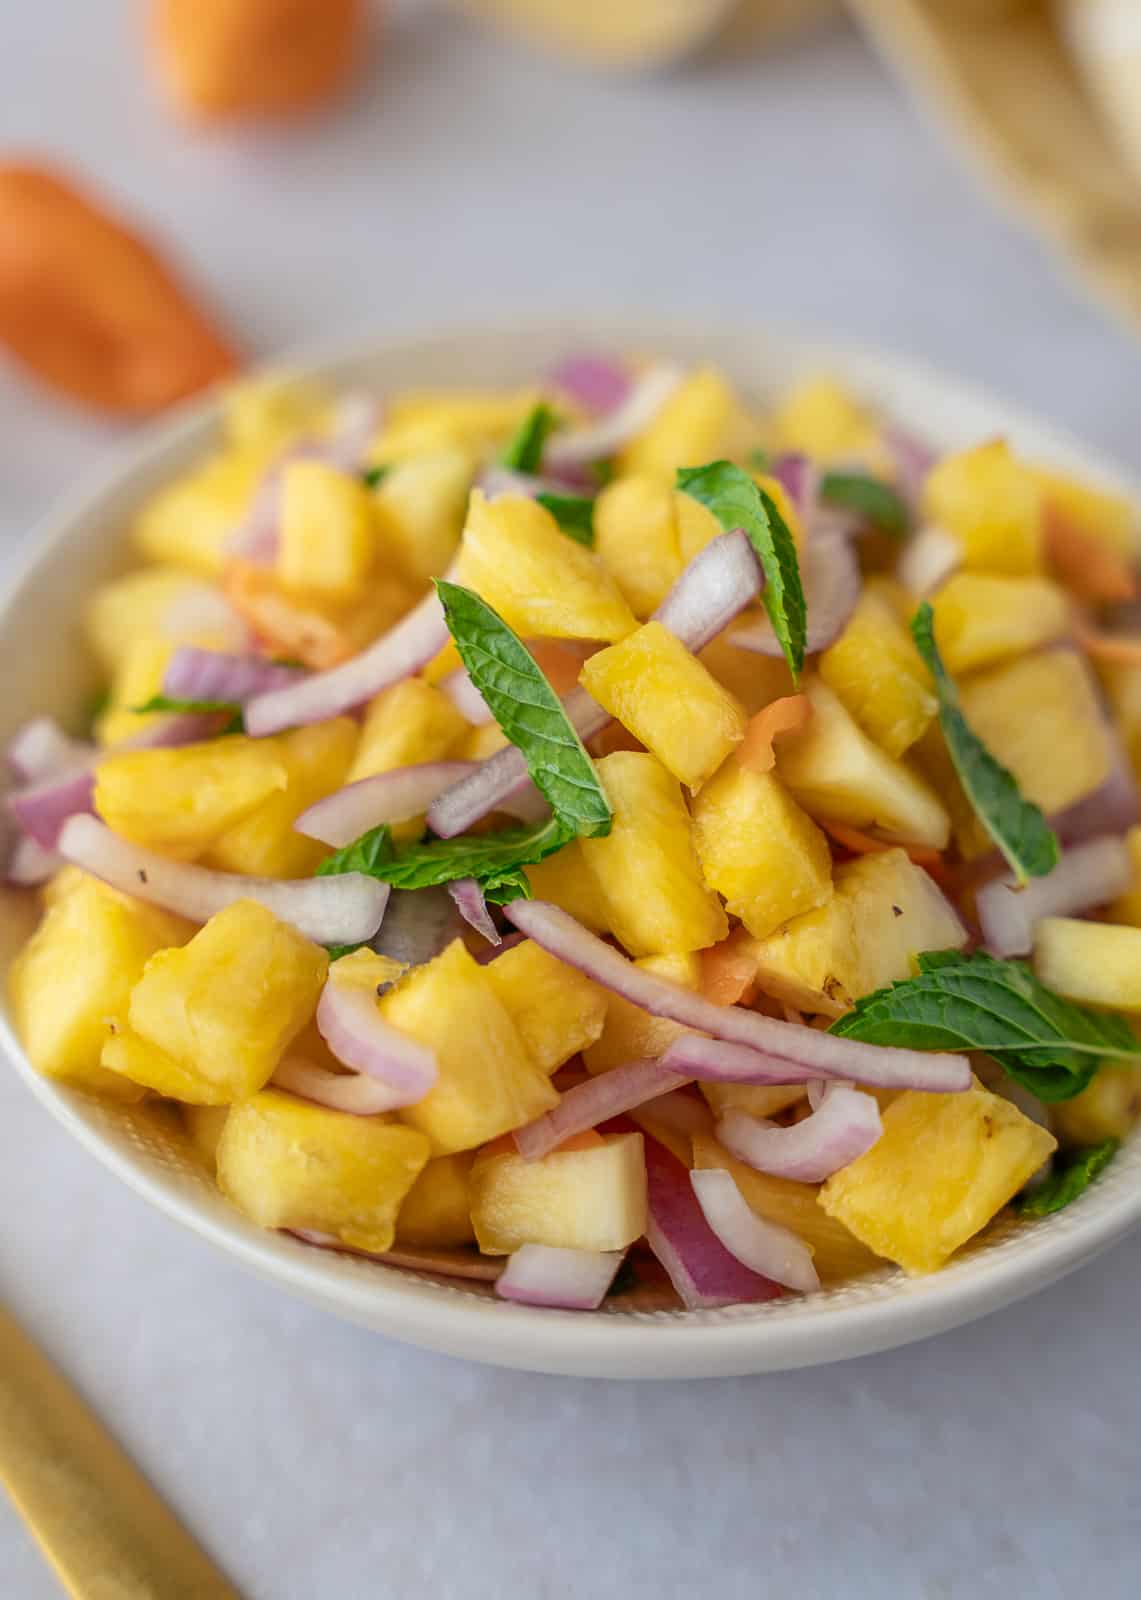 Pineapple habanero salsa in a small dish.